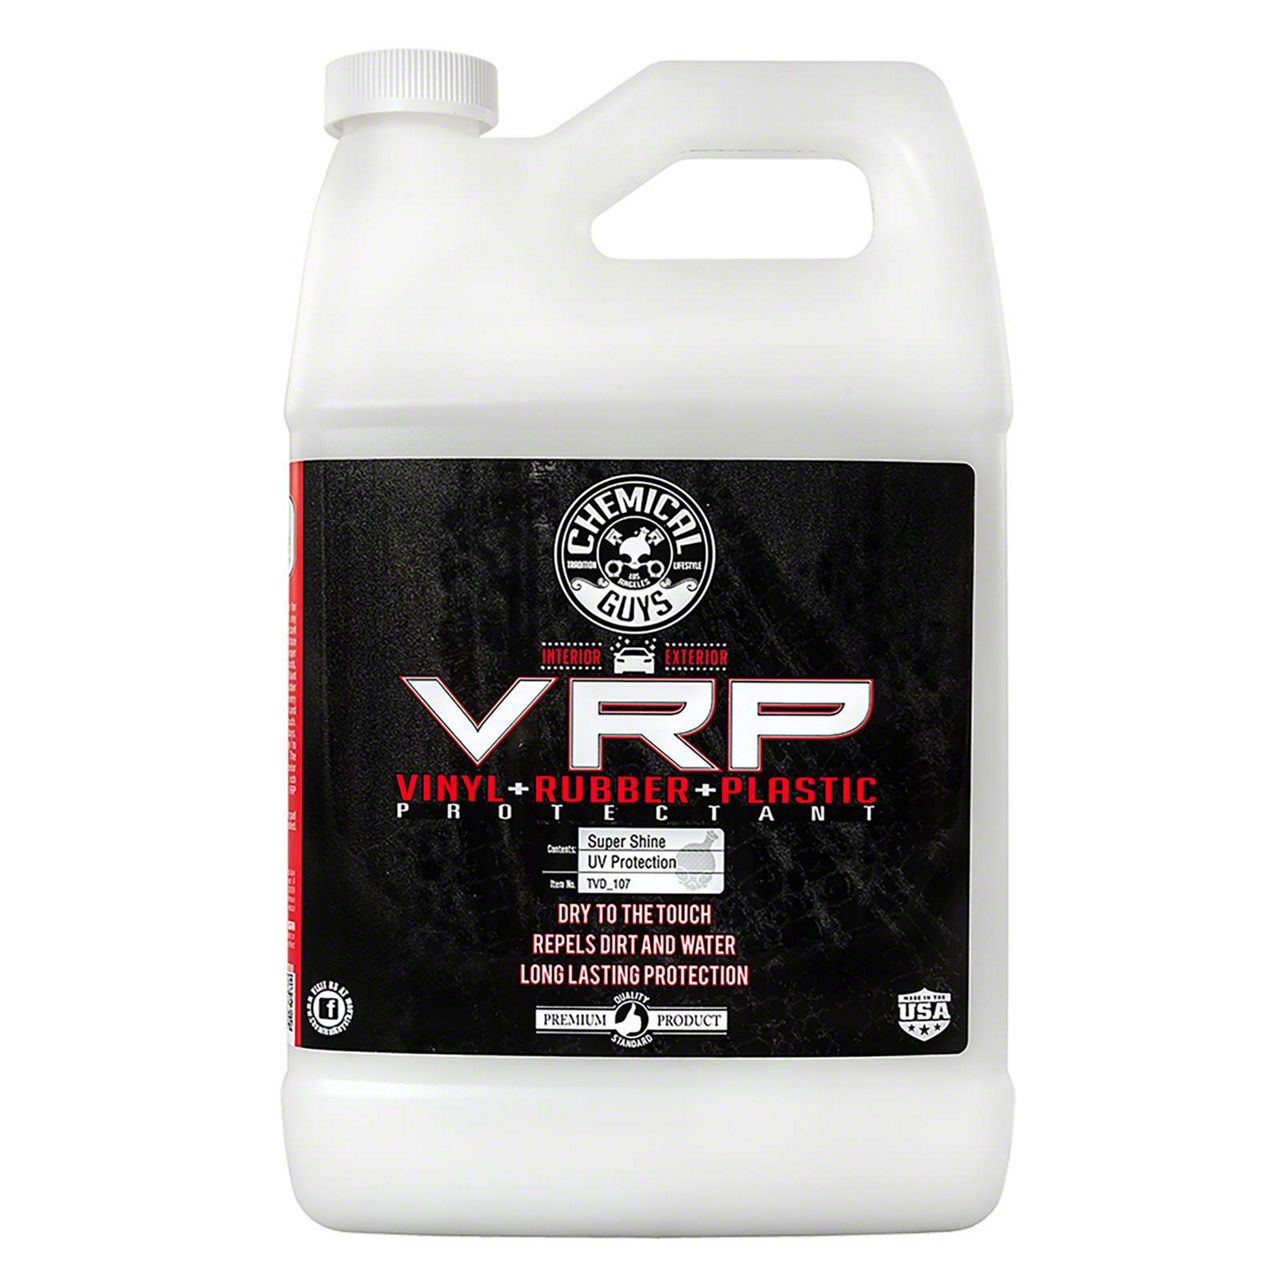 Chemical Guys VRP Super Shine Car Vinyl, Rubber & Plastic